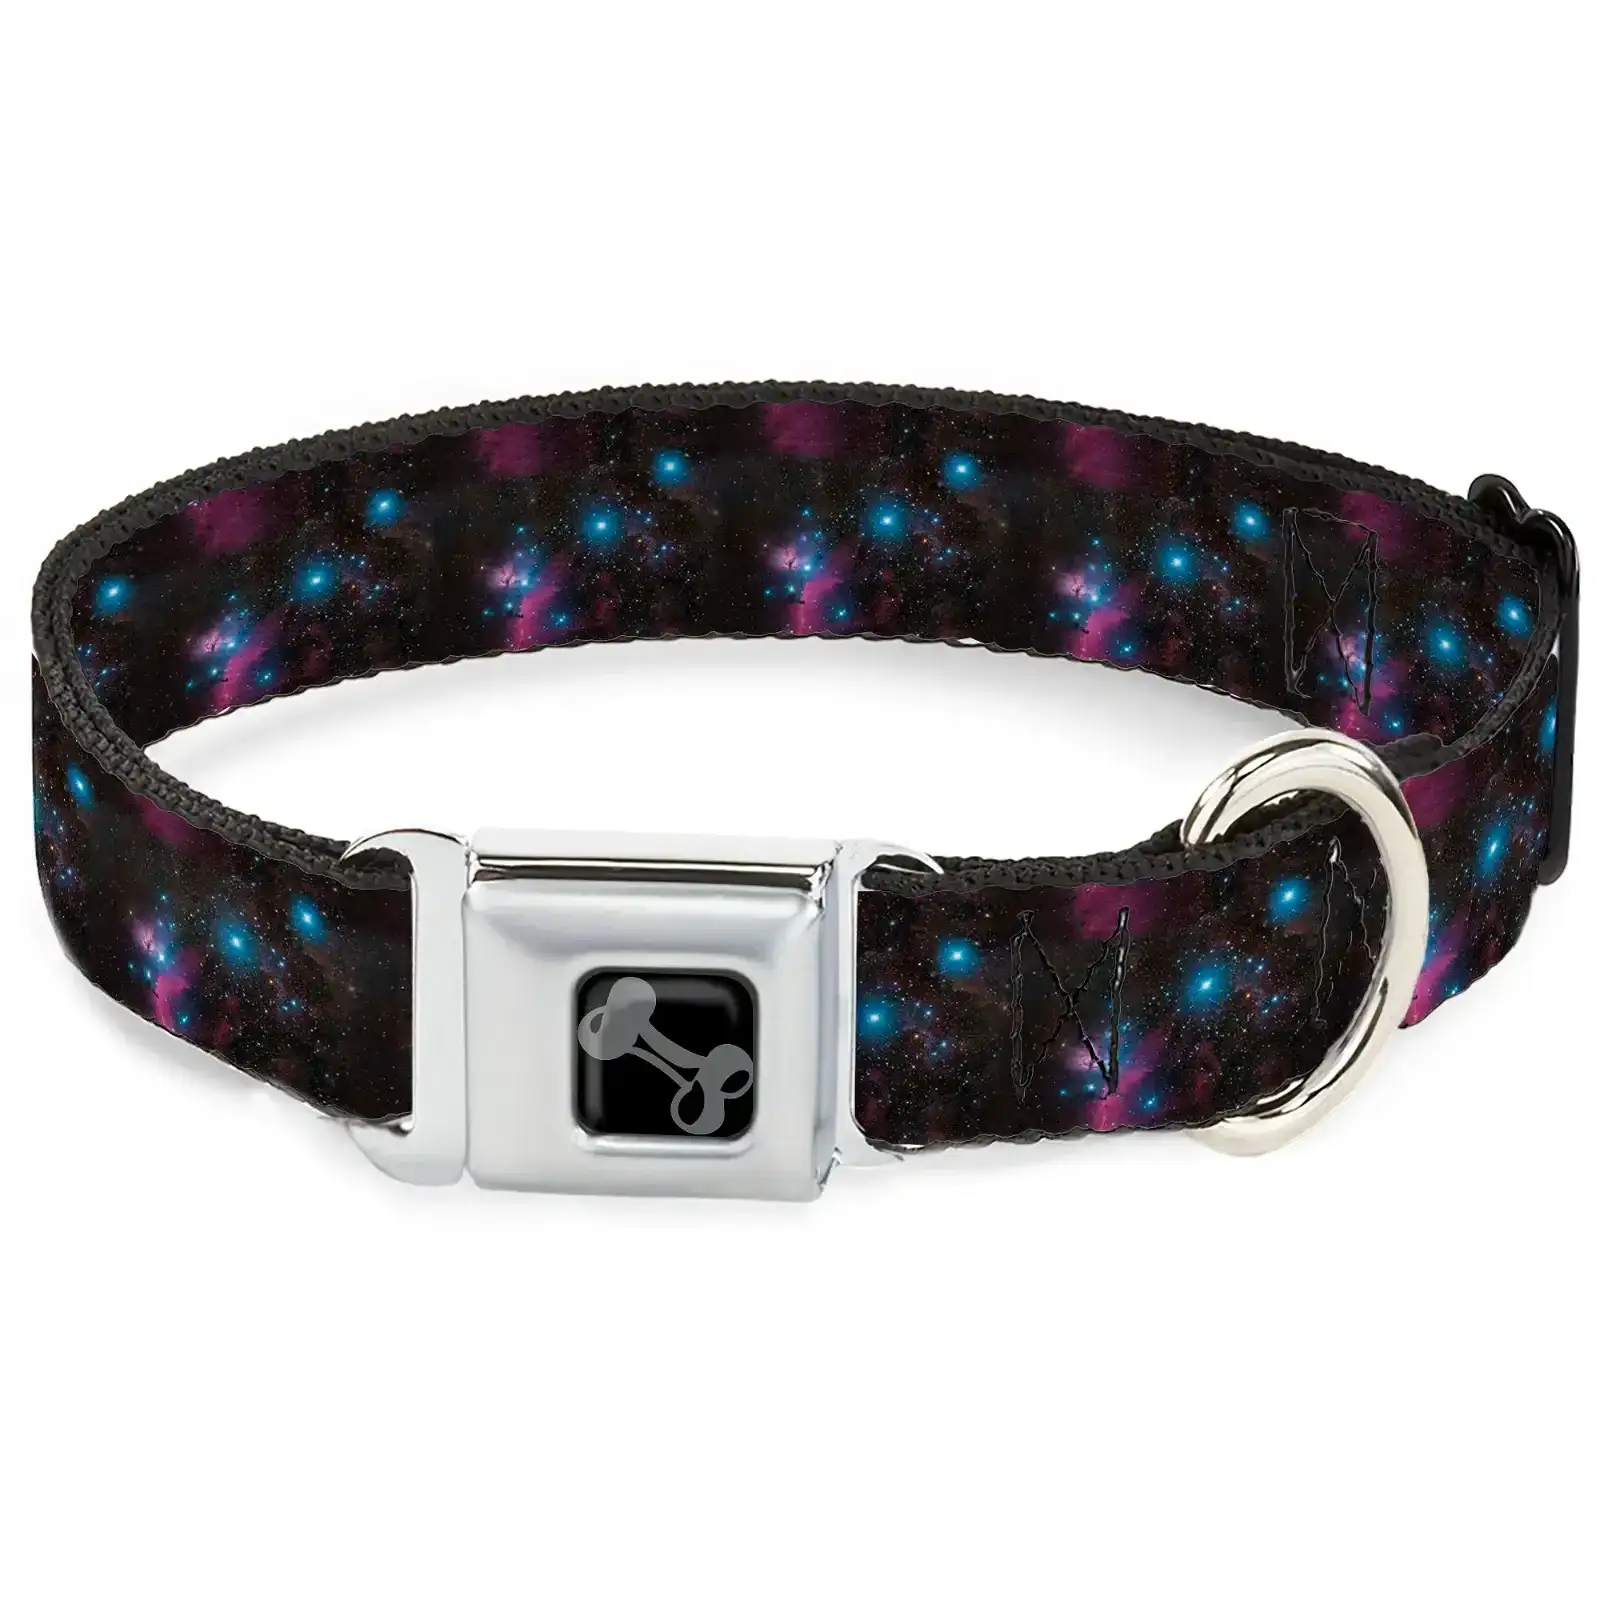 Image of Dog Bone Black/Silver Seatbelt Buckle Collar - Orion's Belt Constellation